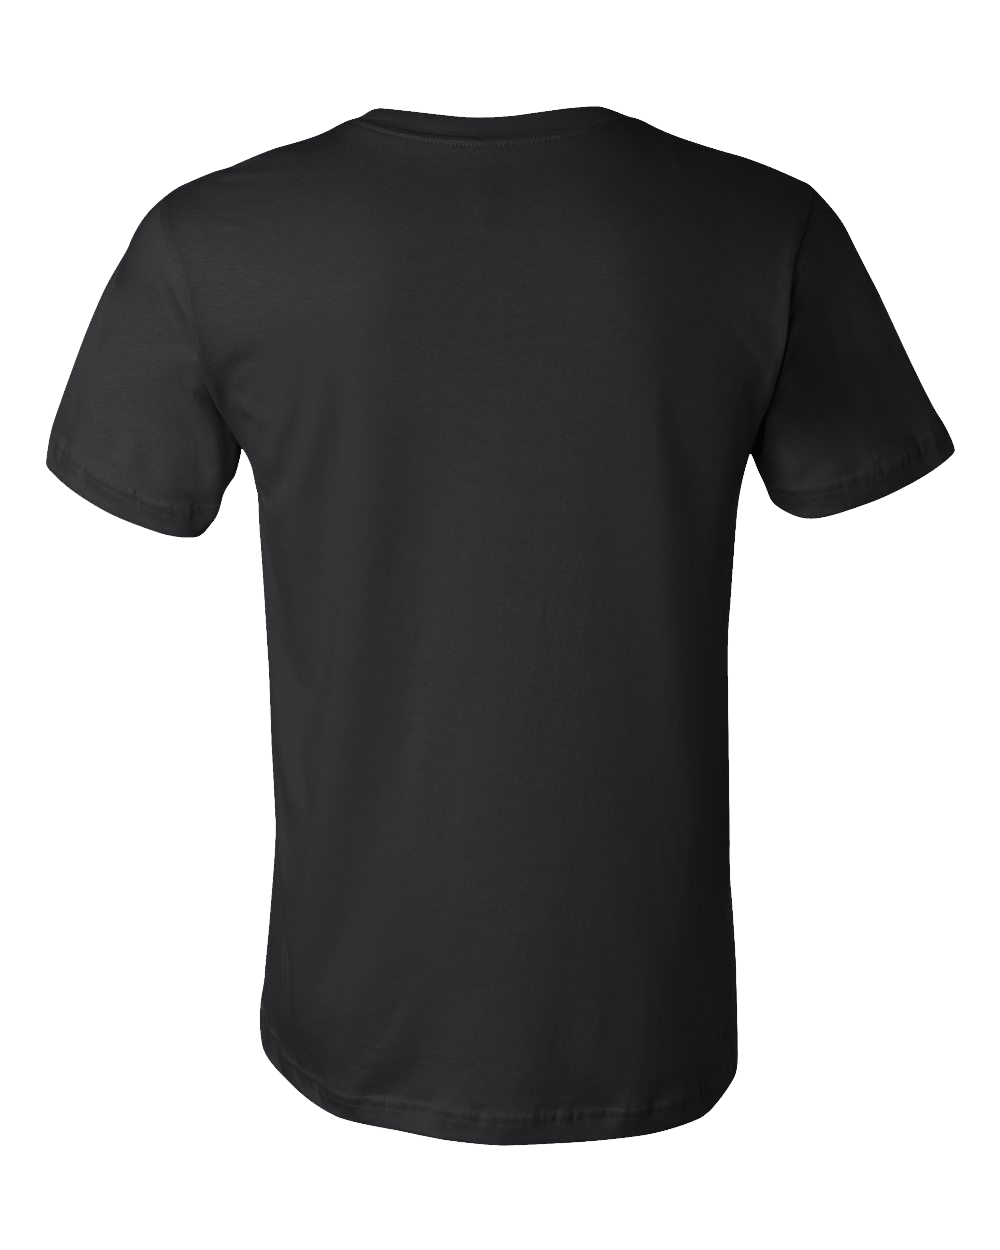 Standard Black Lanett, AL | Retro, Vintage Style Alabama Pride  T-shirt